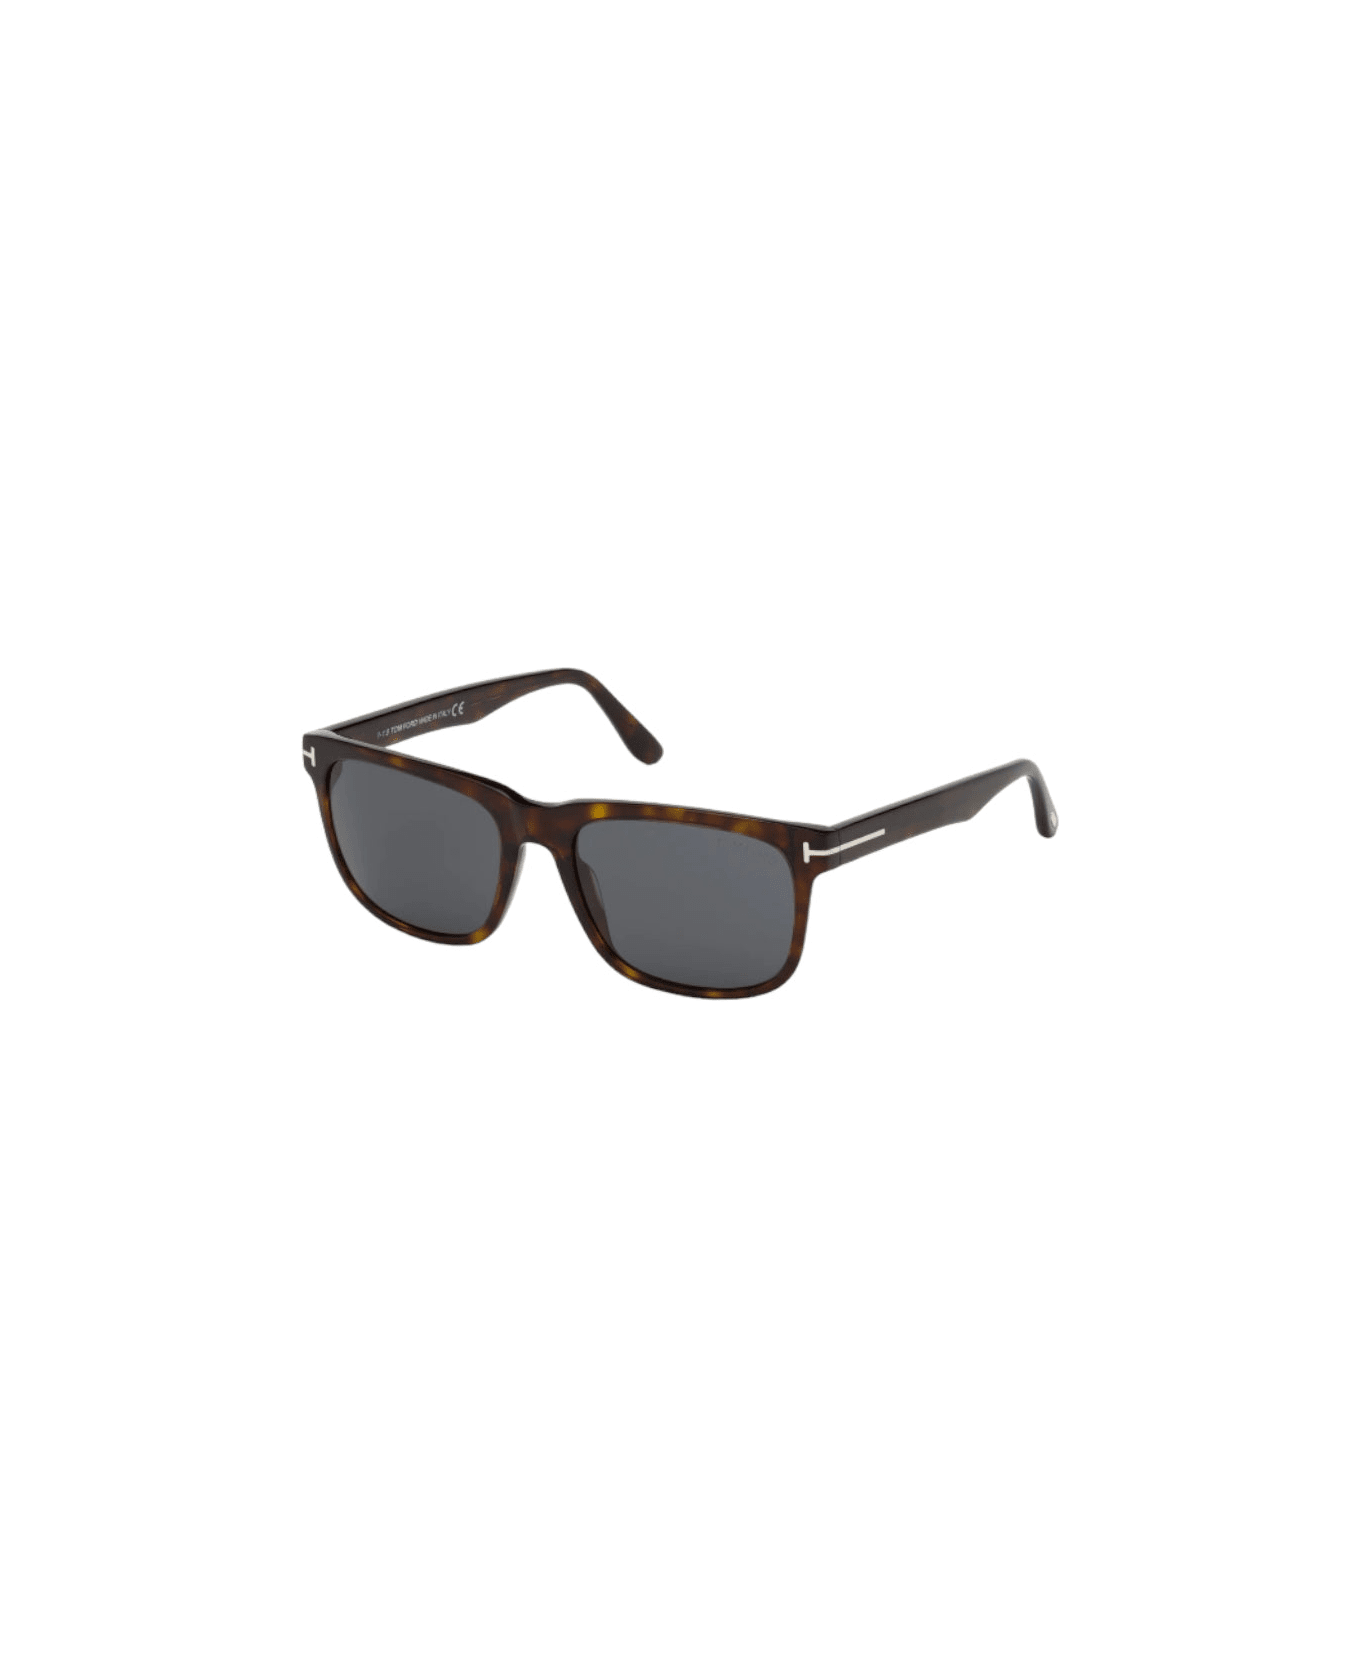 Tom Ford Eyewear Stephenson - Ft 775 Sunglasses